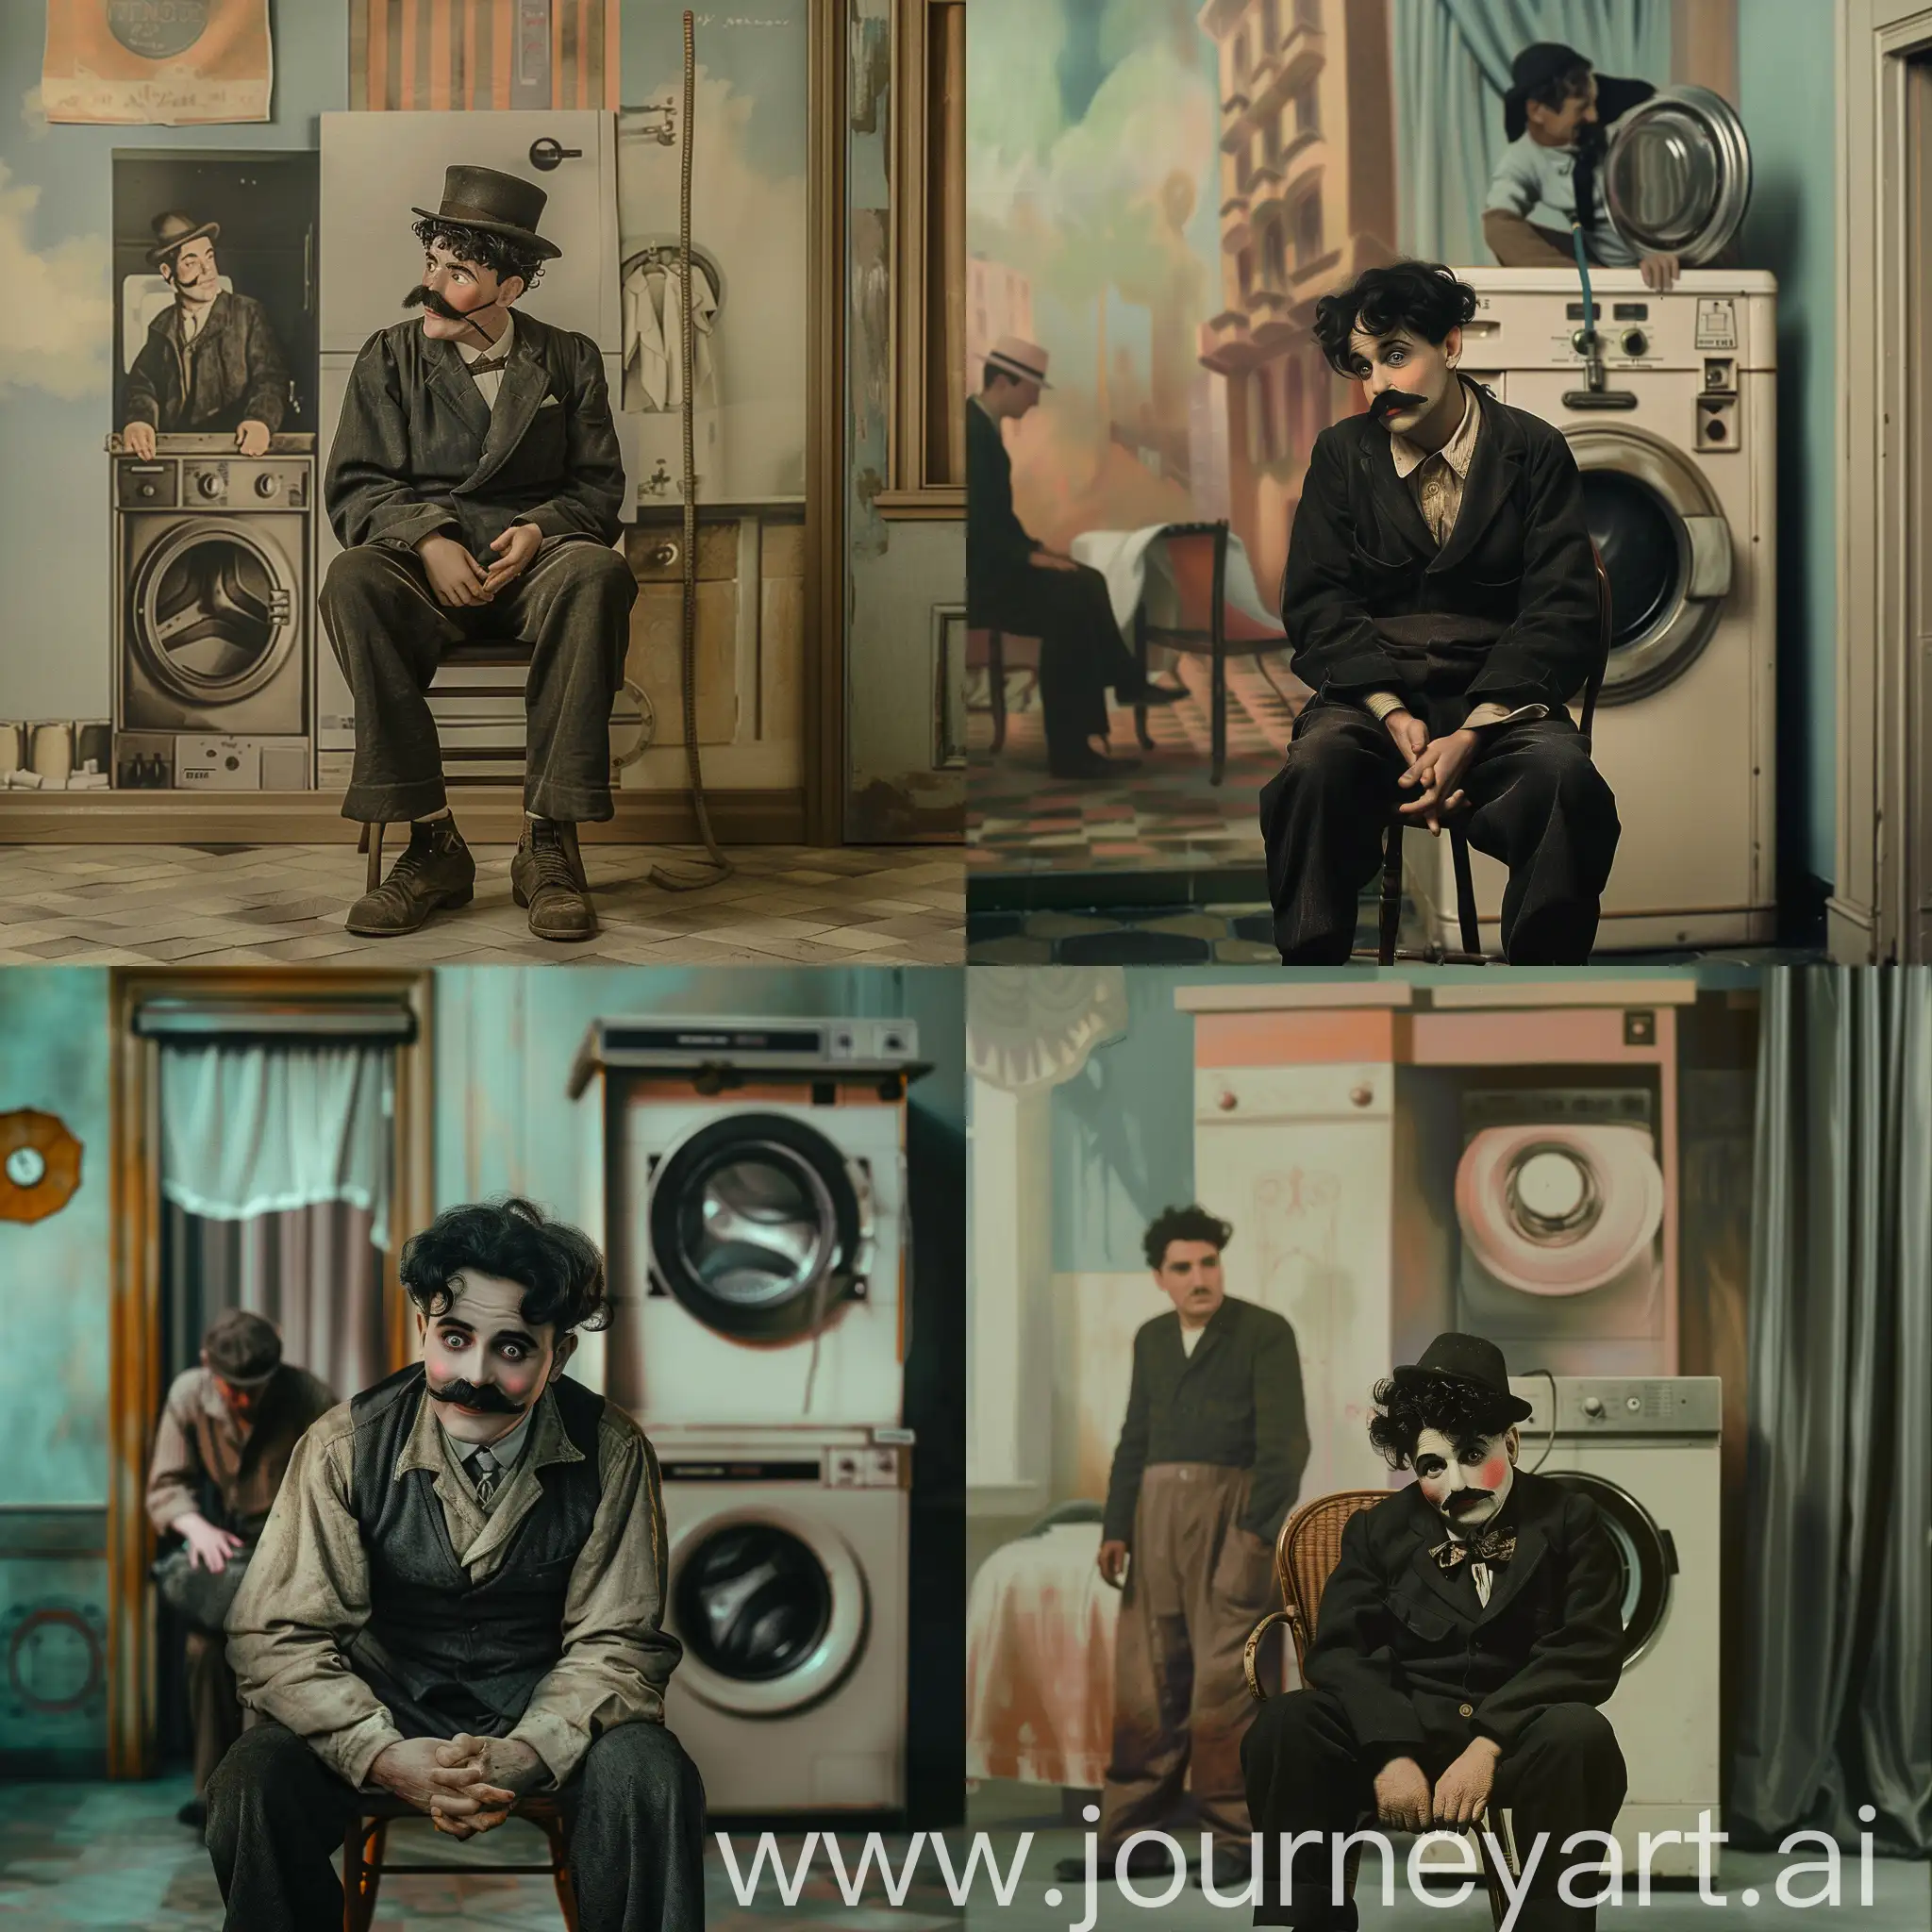 Charlie-Chaplin-Smiles-as-Repairman-Fixes-Washing-Machine-in-Calm-Hotel-Room